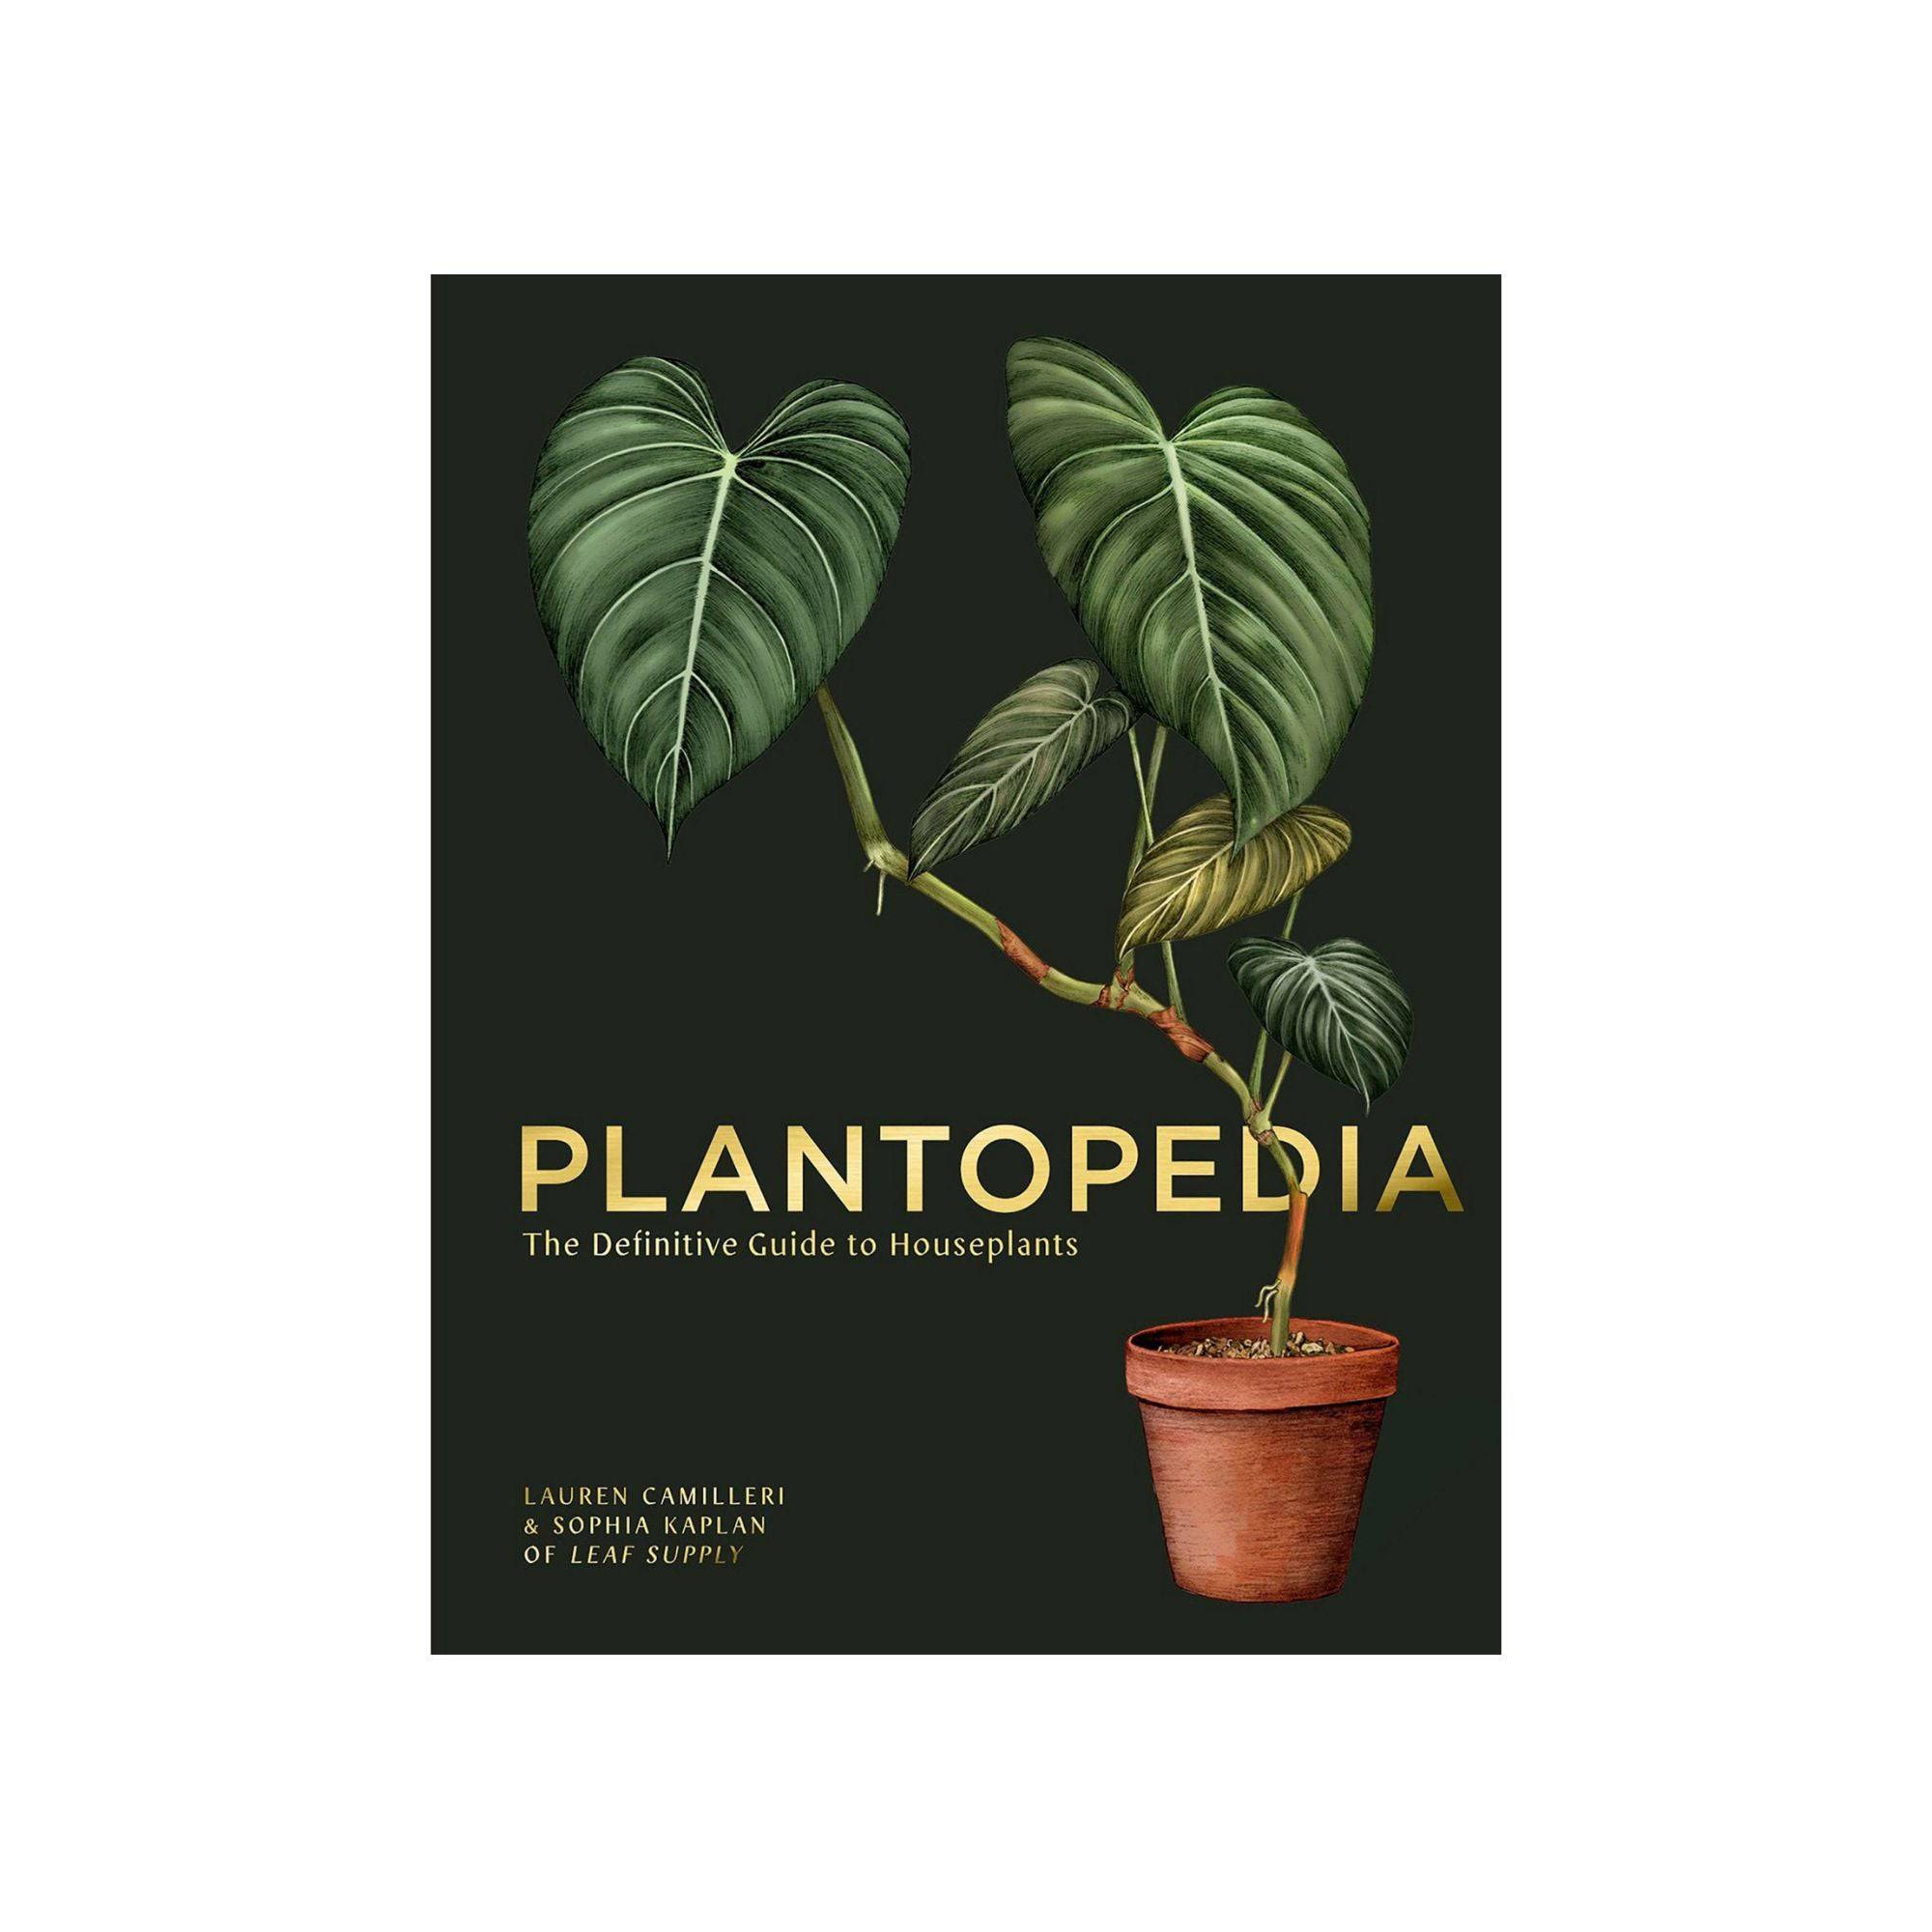 Plantopedia - THAT COOL LIVING